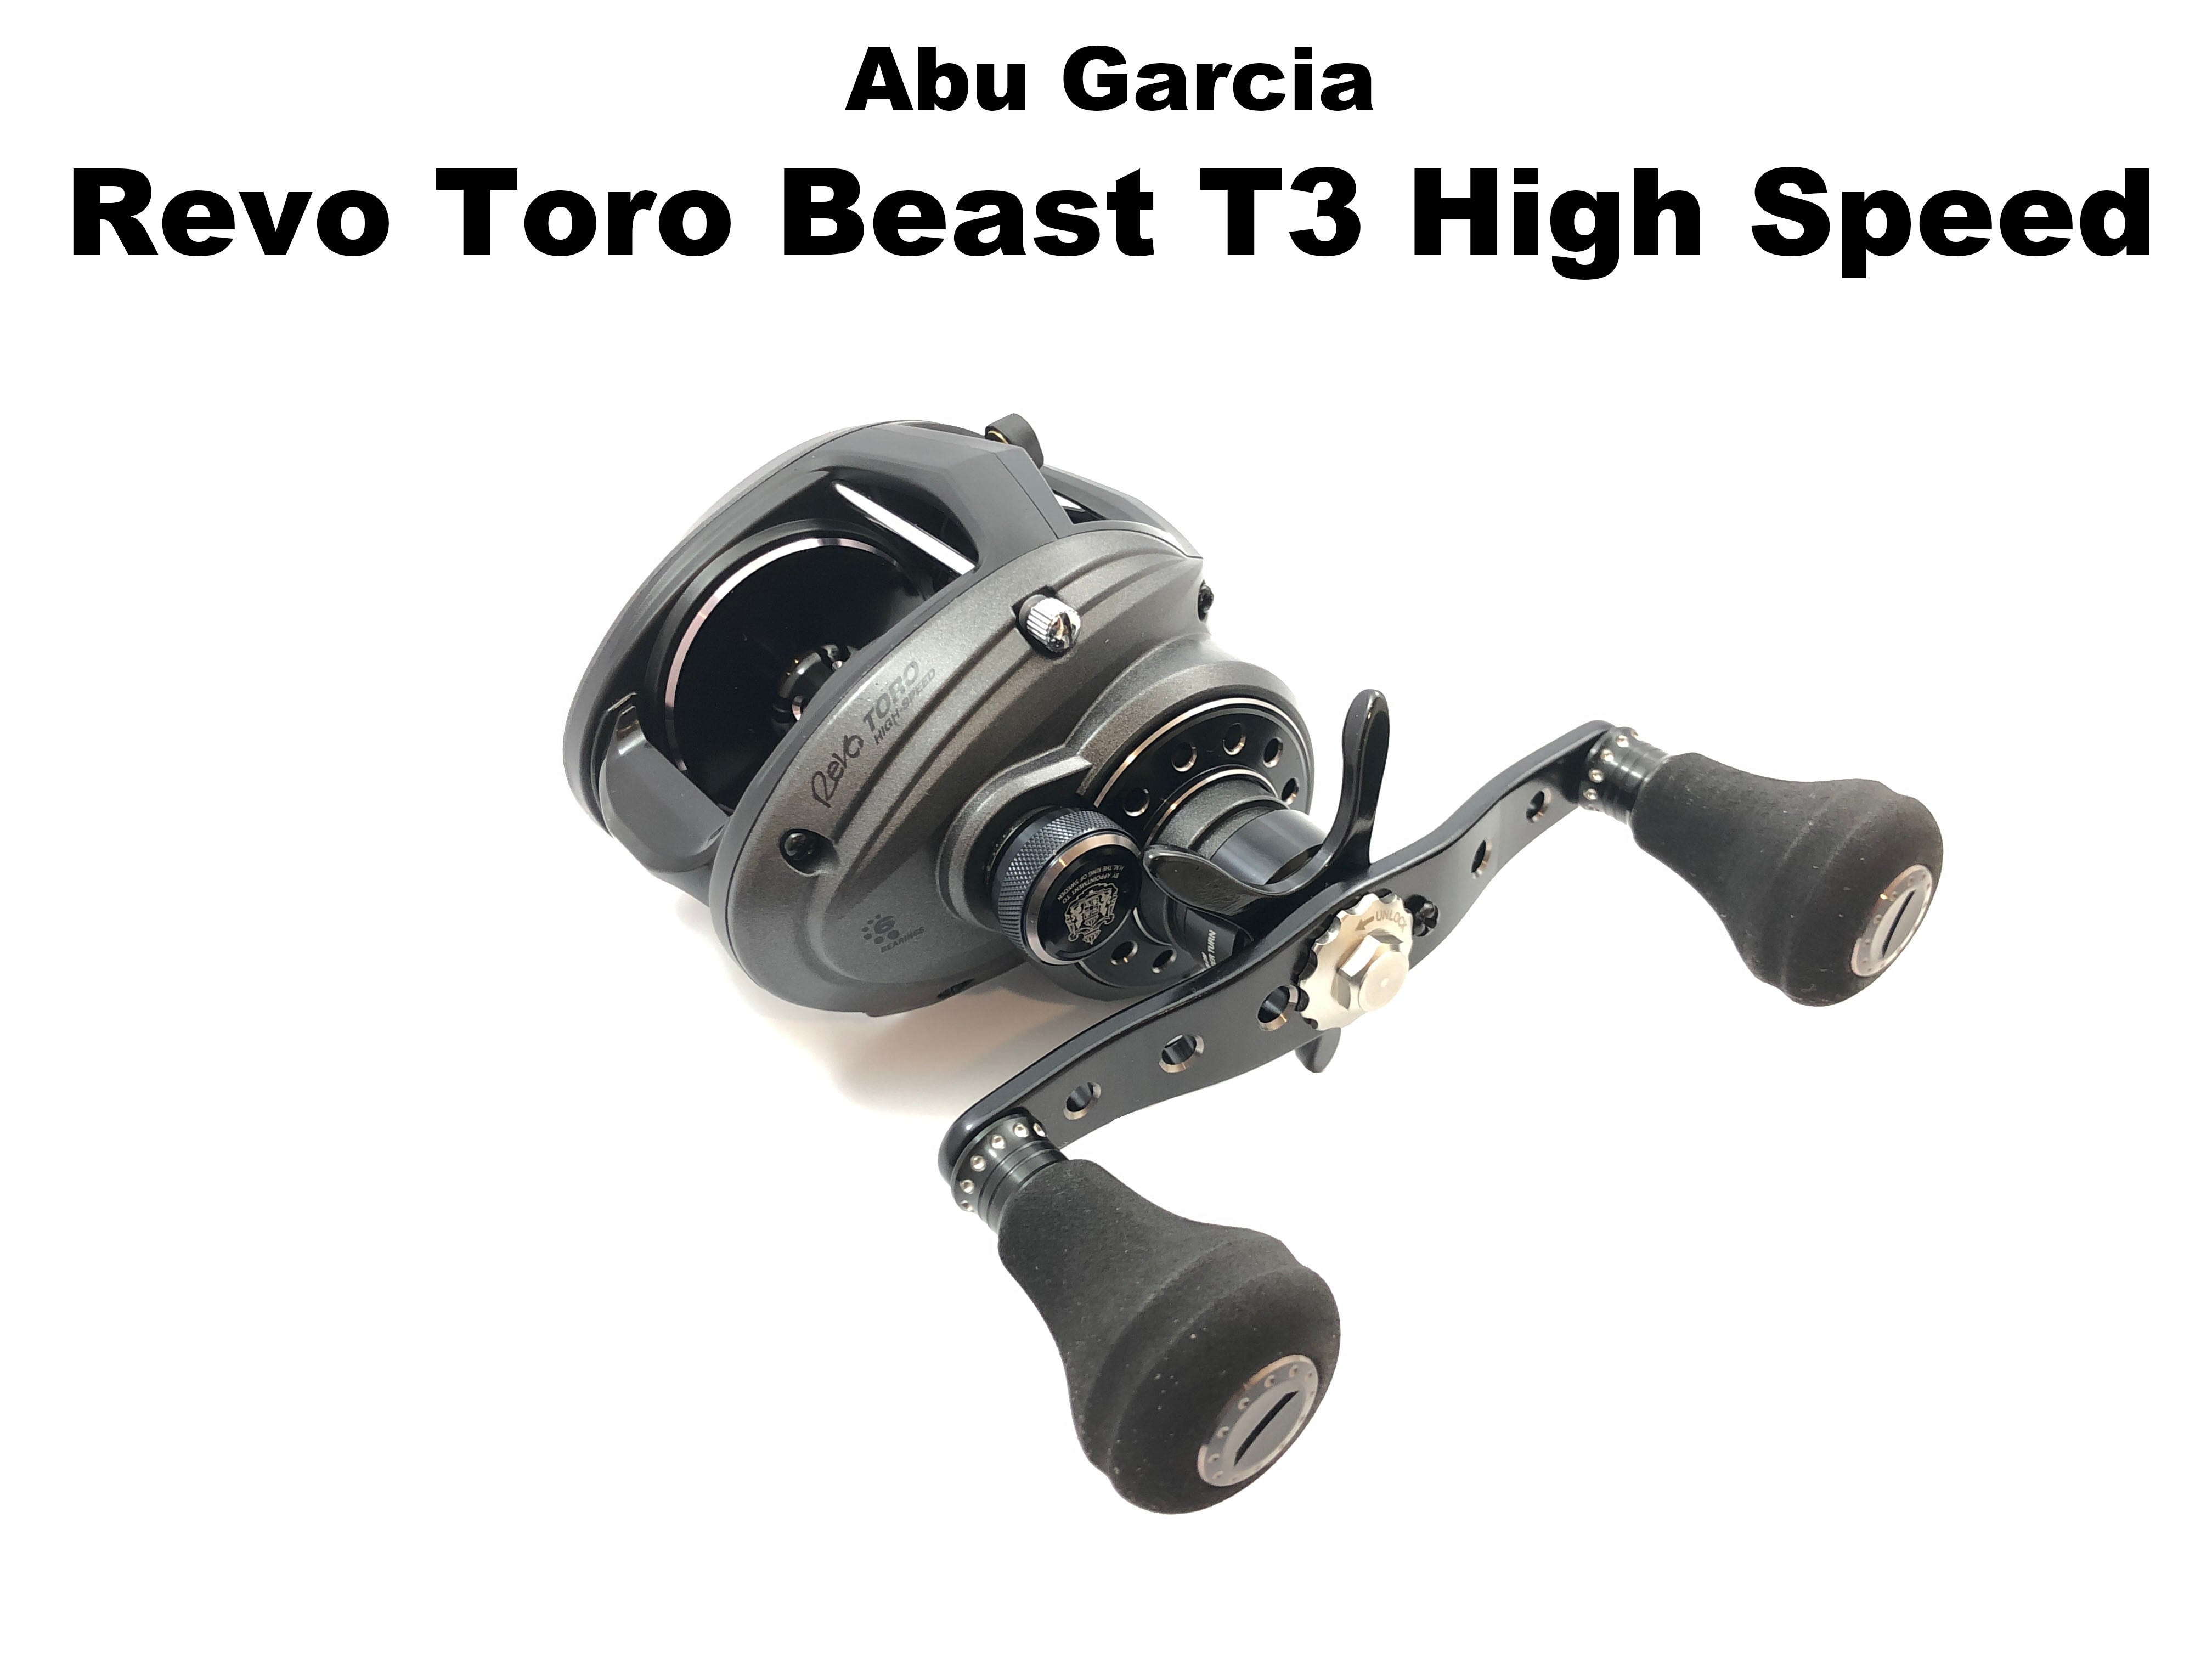 Abu Garcia Revo Toro Beast T3 High Speed Reel (Paddle Handle)